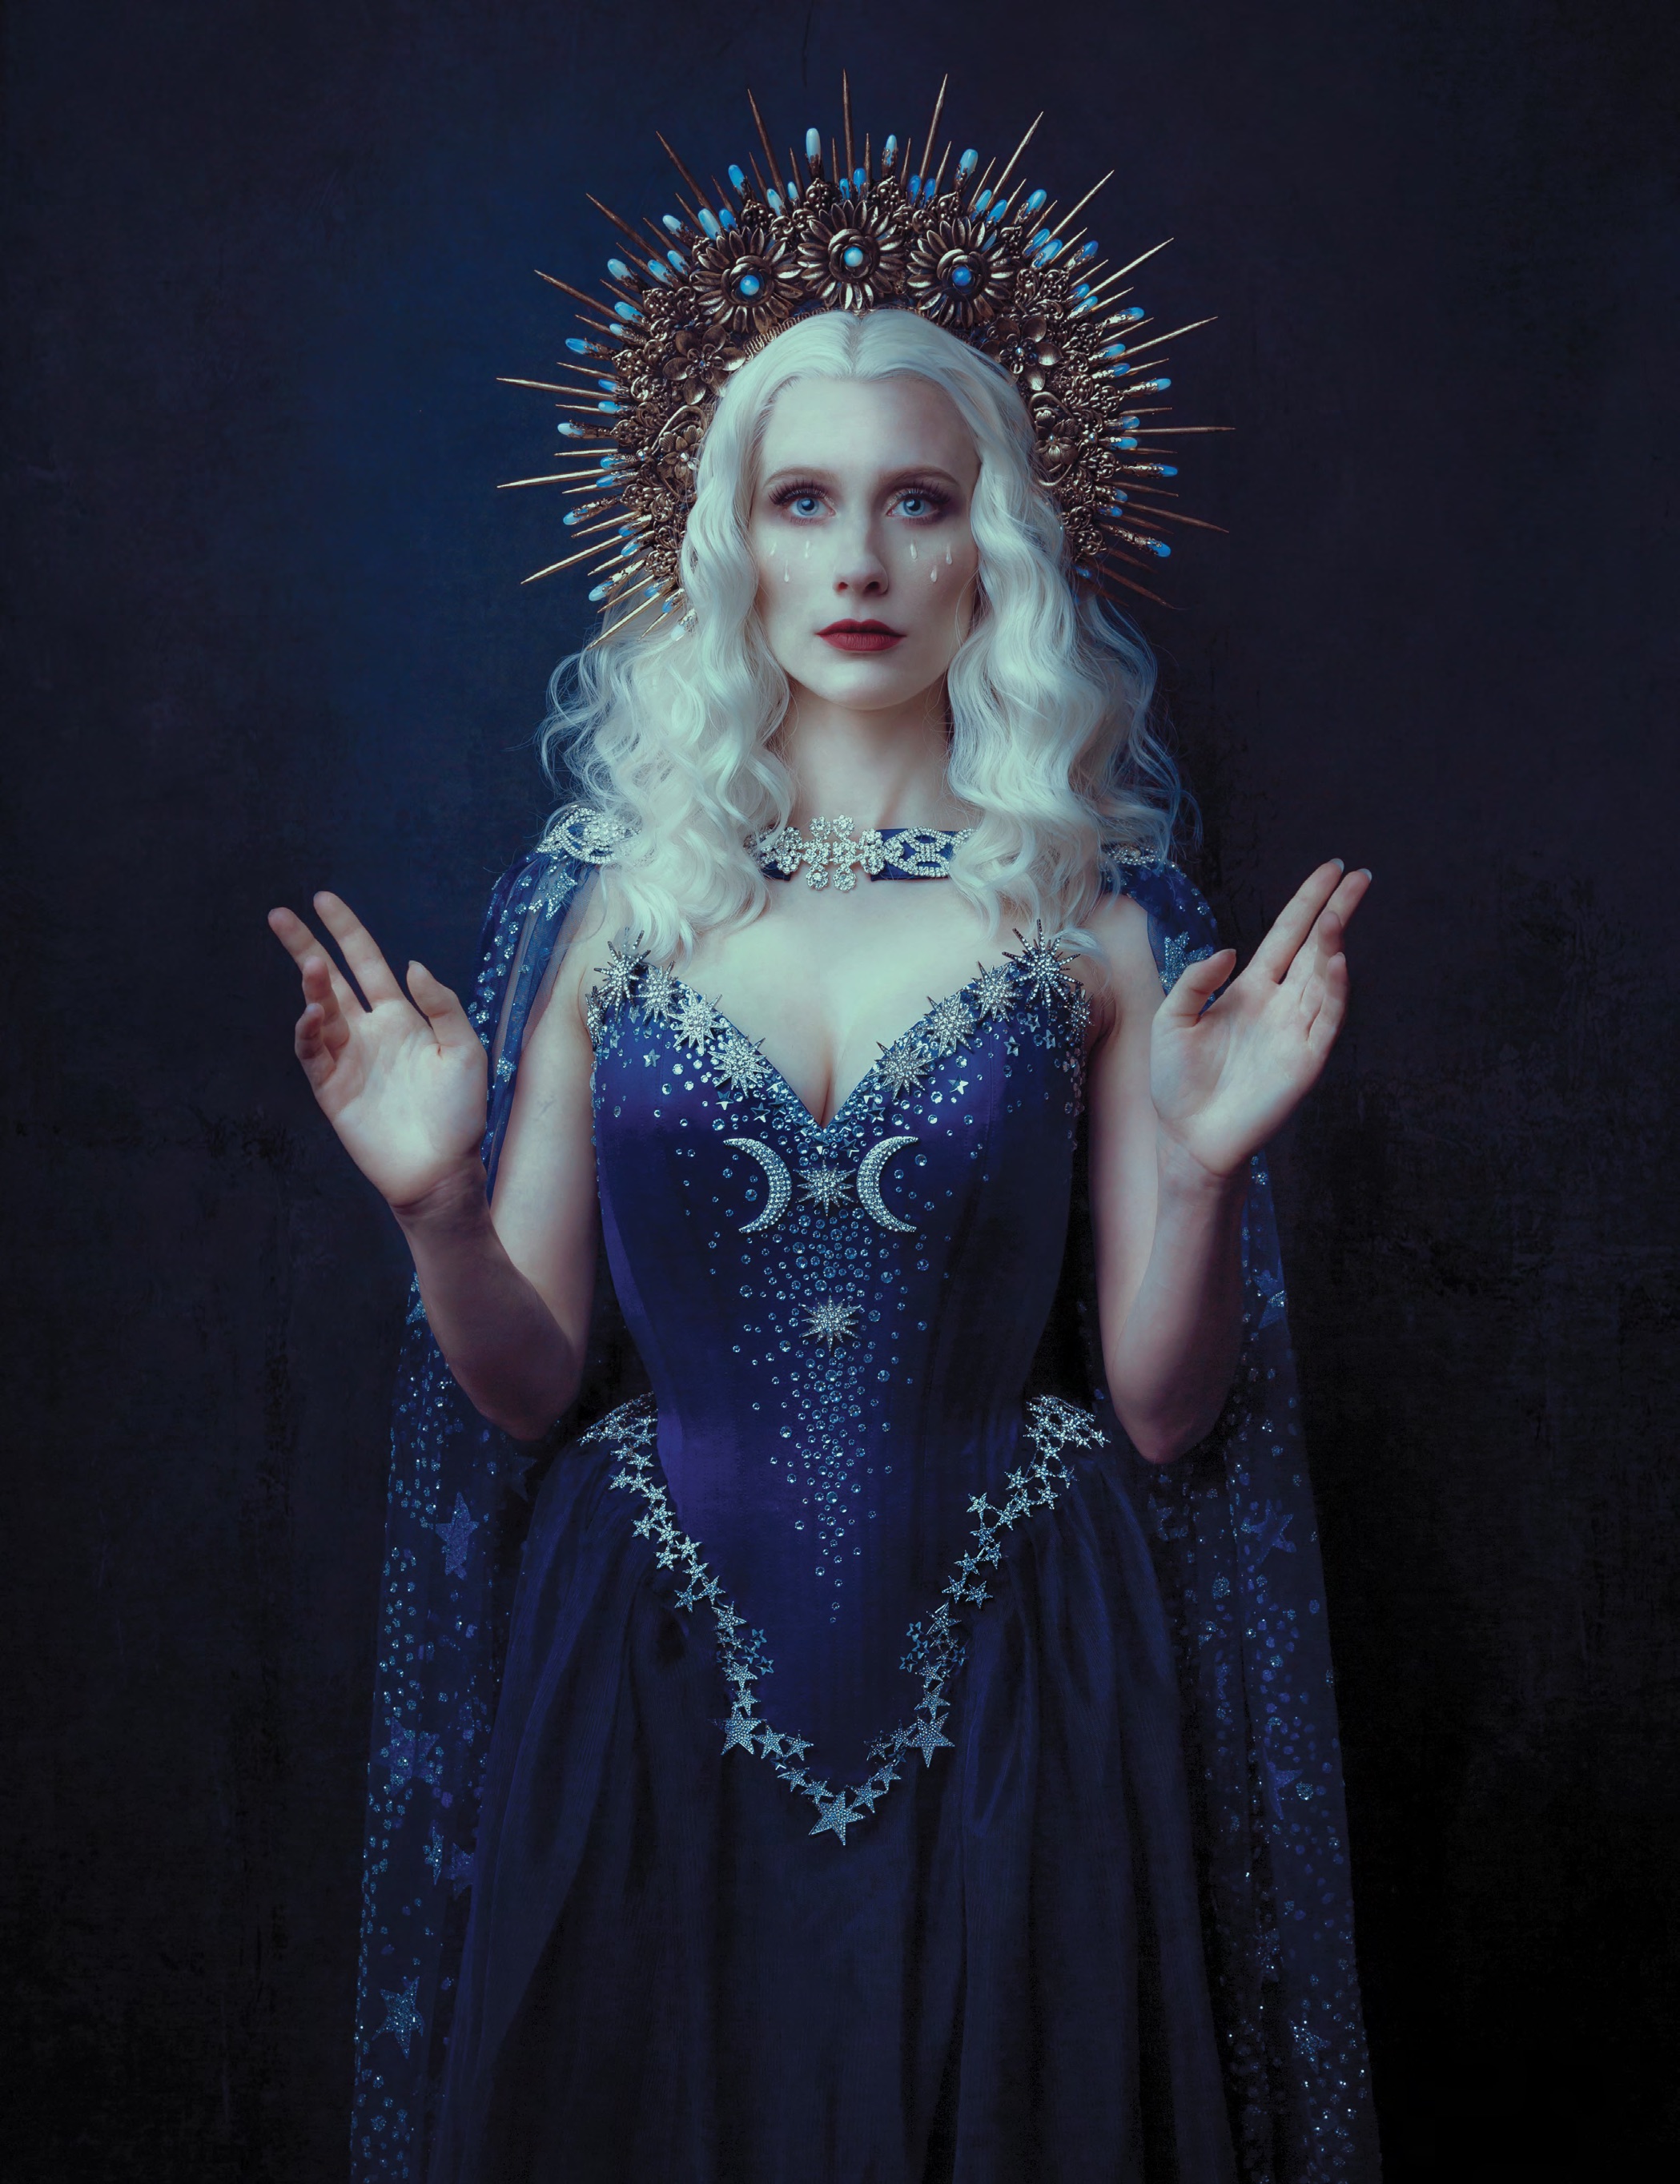 The Night Goddess Elven Corset Dress, Etsy, Model: Luce Del Sole Makeup: Jane Von Vintage Halo: Hysteria Machine Photography: Studio Sheridan’s Art Dress: Alice Corsets